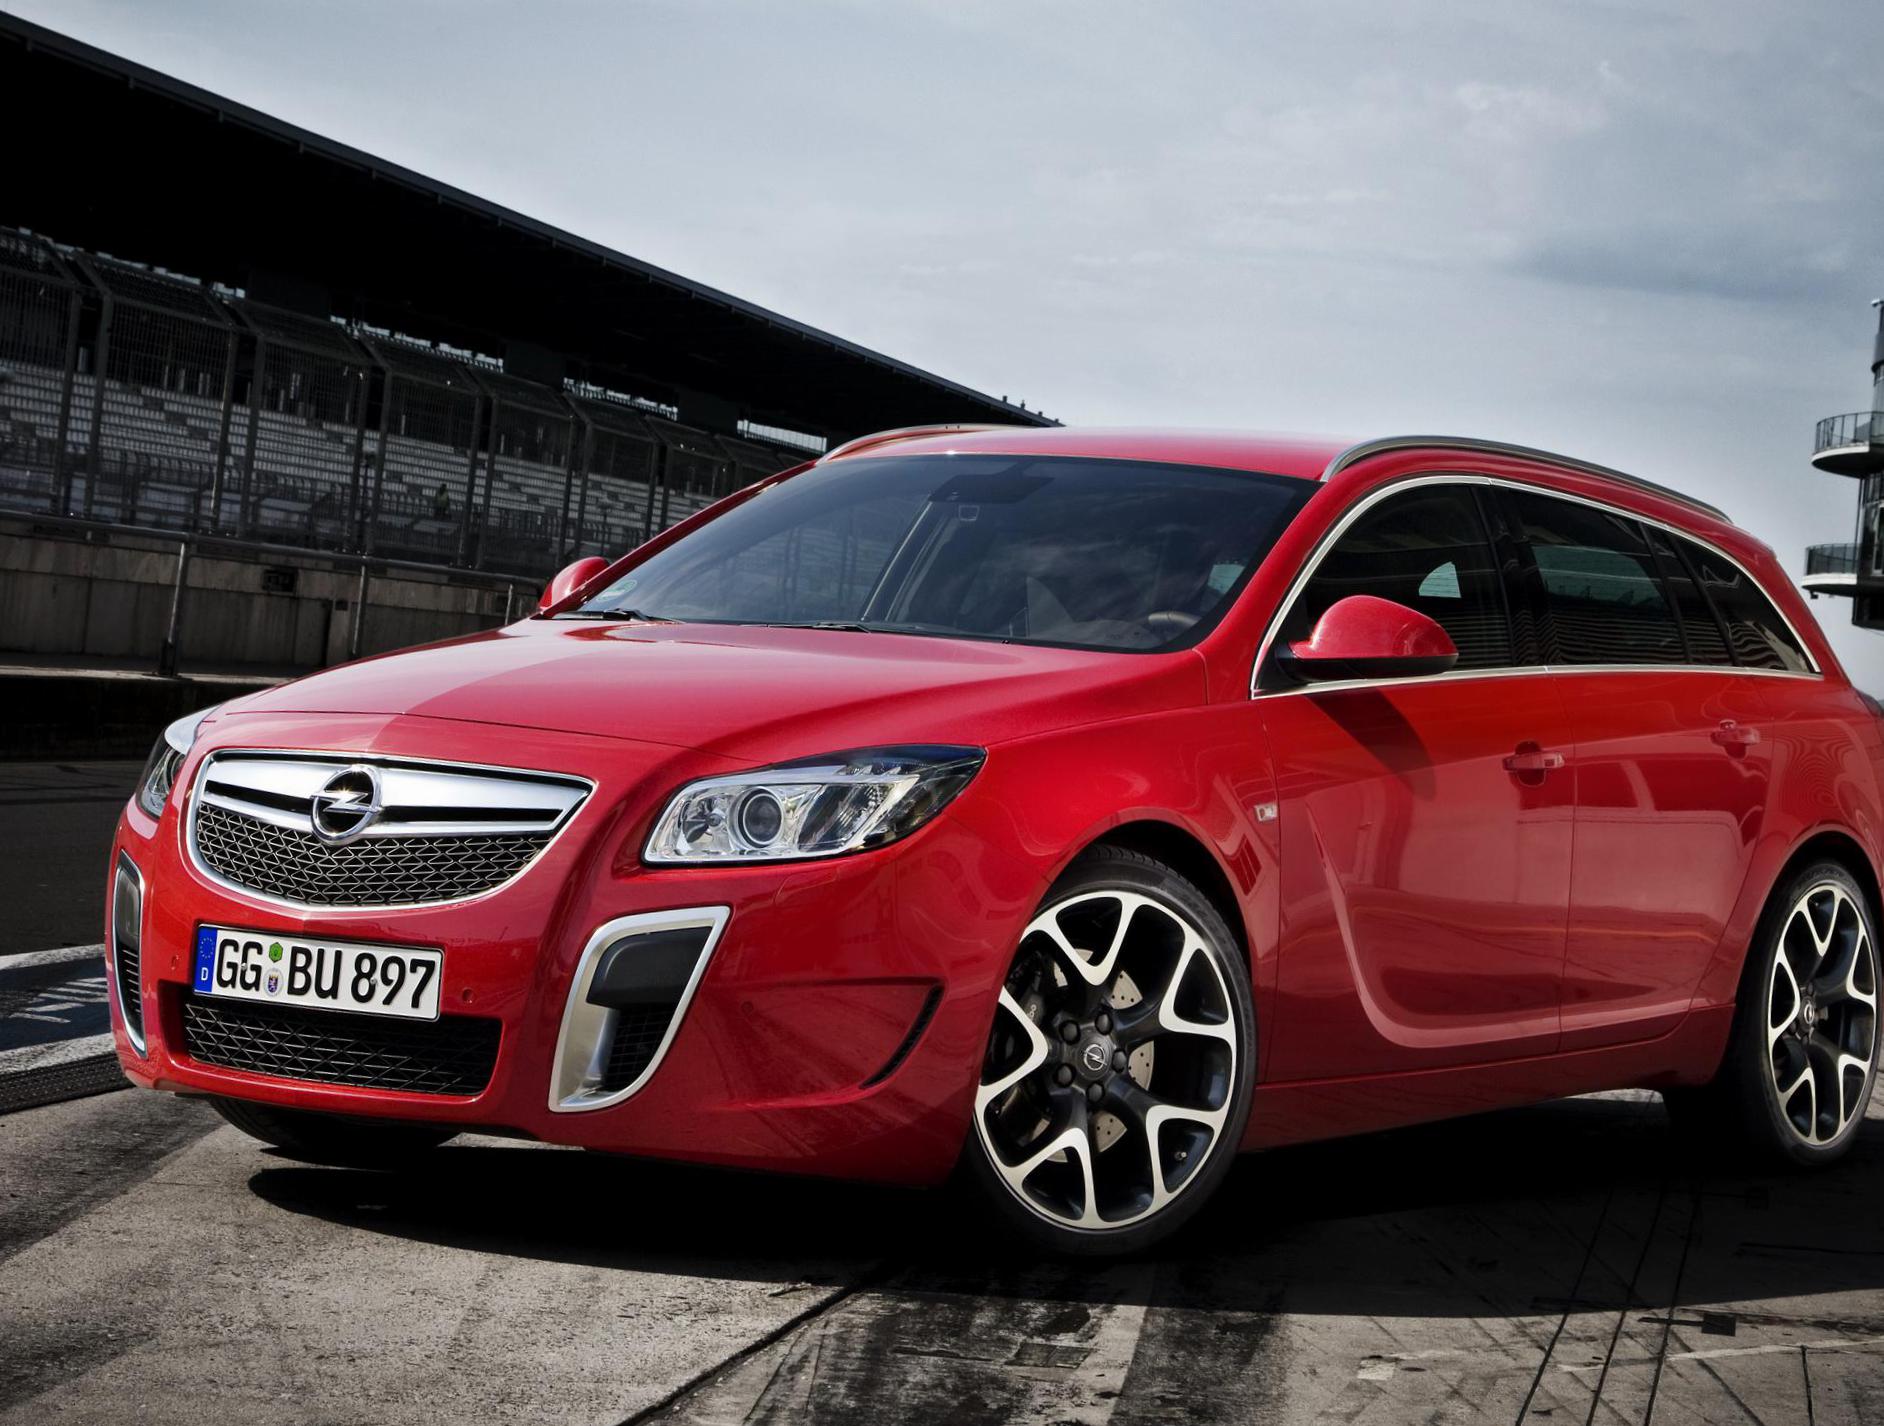 Insignia OPC Sports Tourer Opel prices wagon